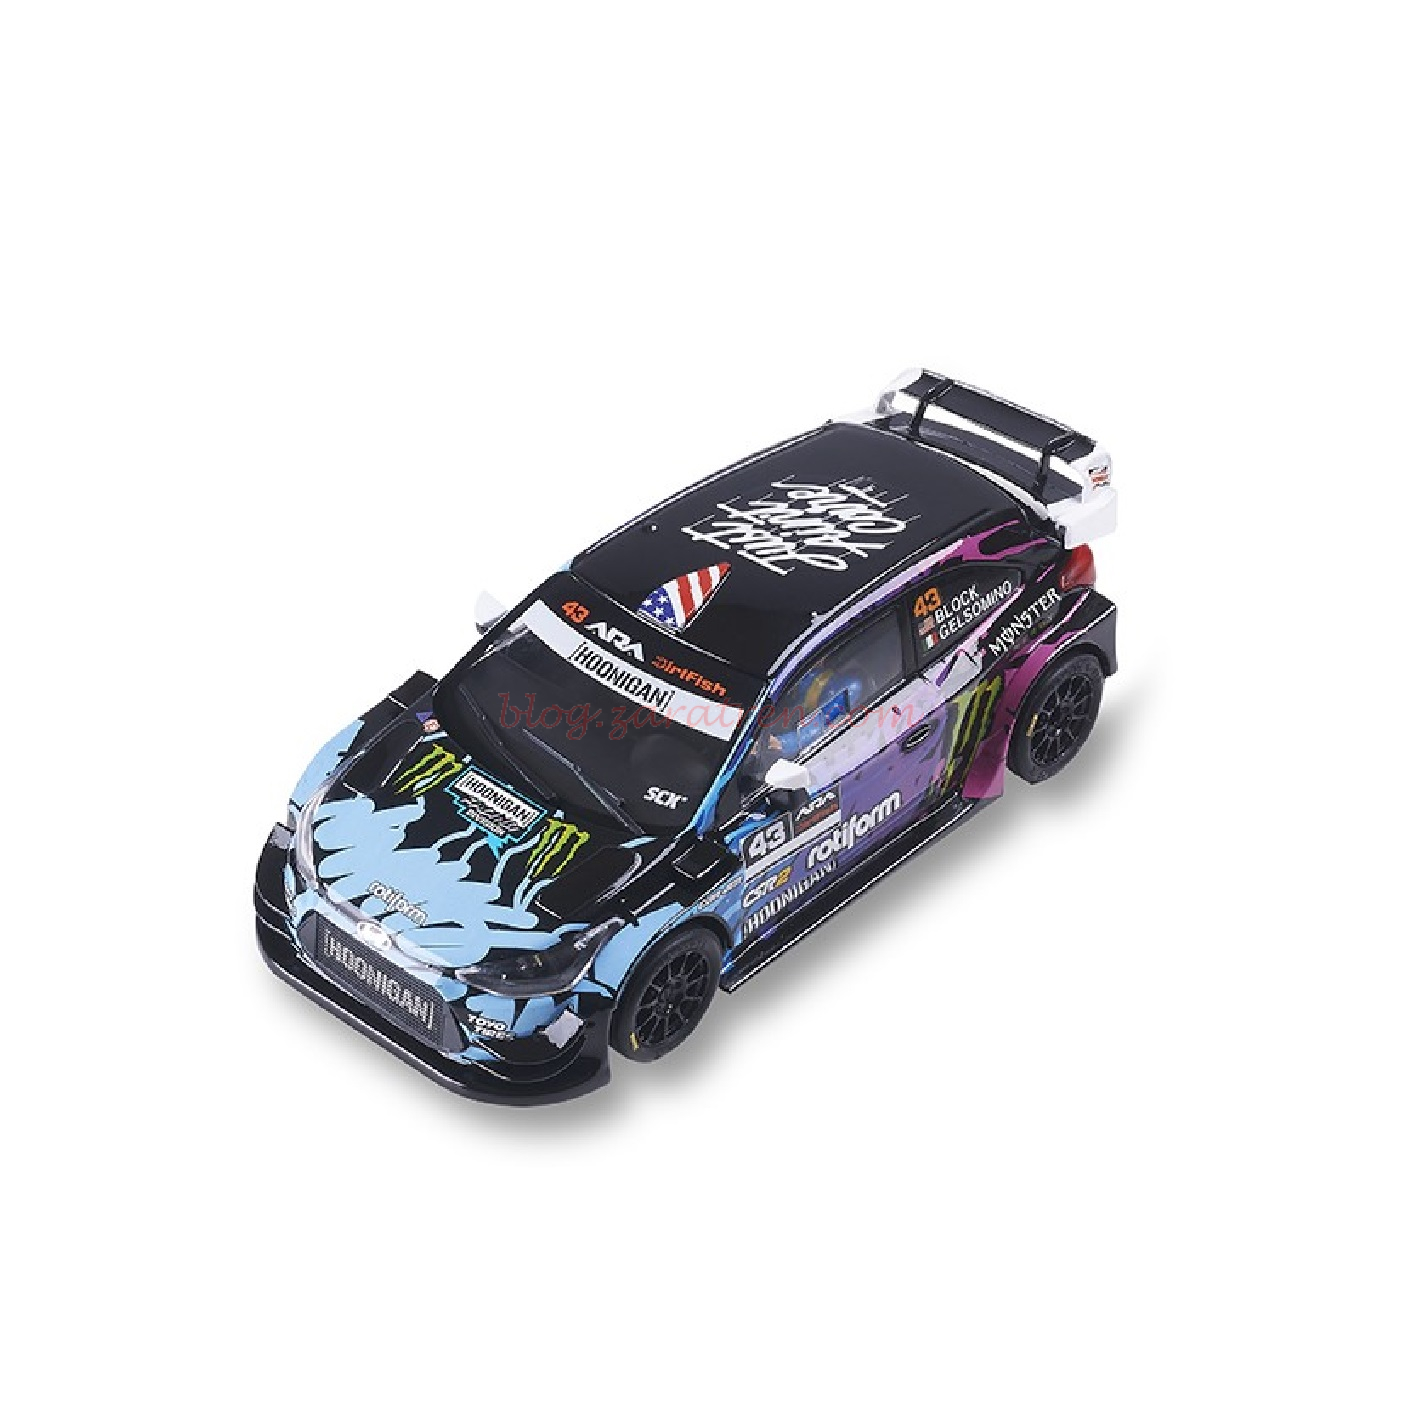 Scalextric – Hyundai I20 WRC – Block, Escala 1/32, Ref: U10454S300